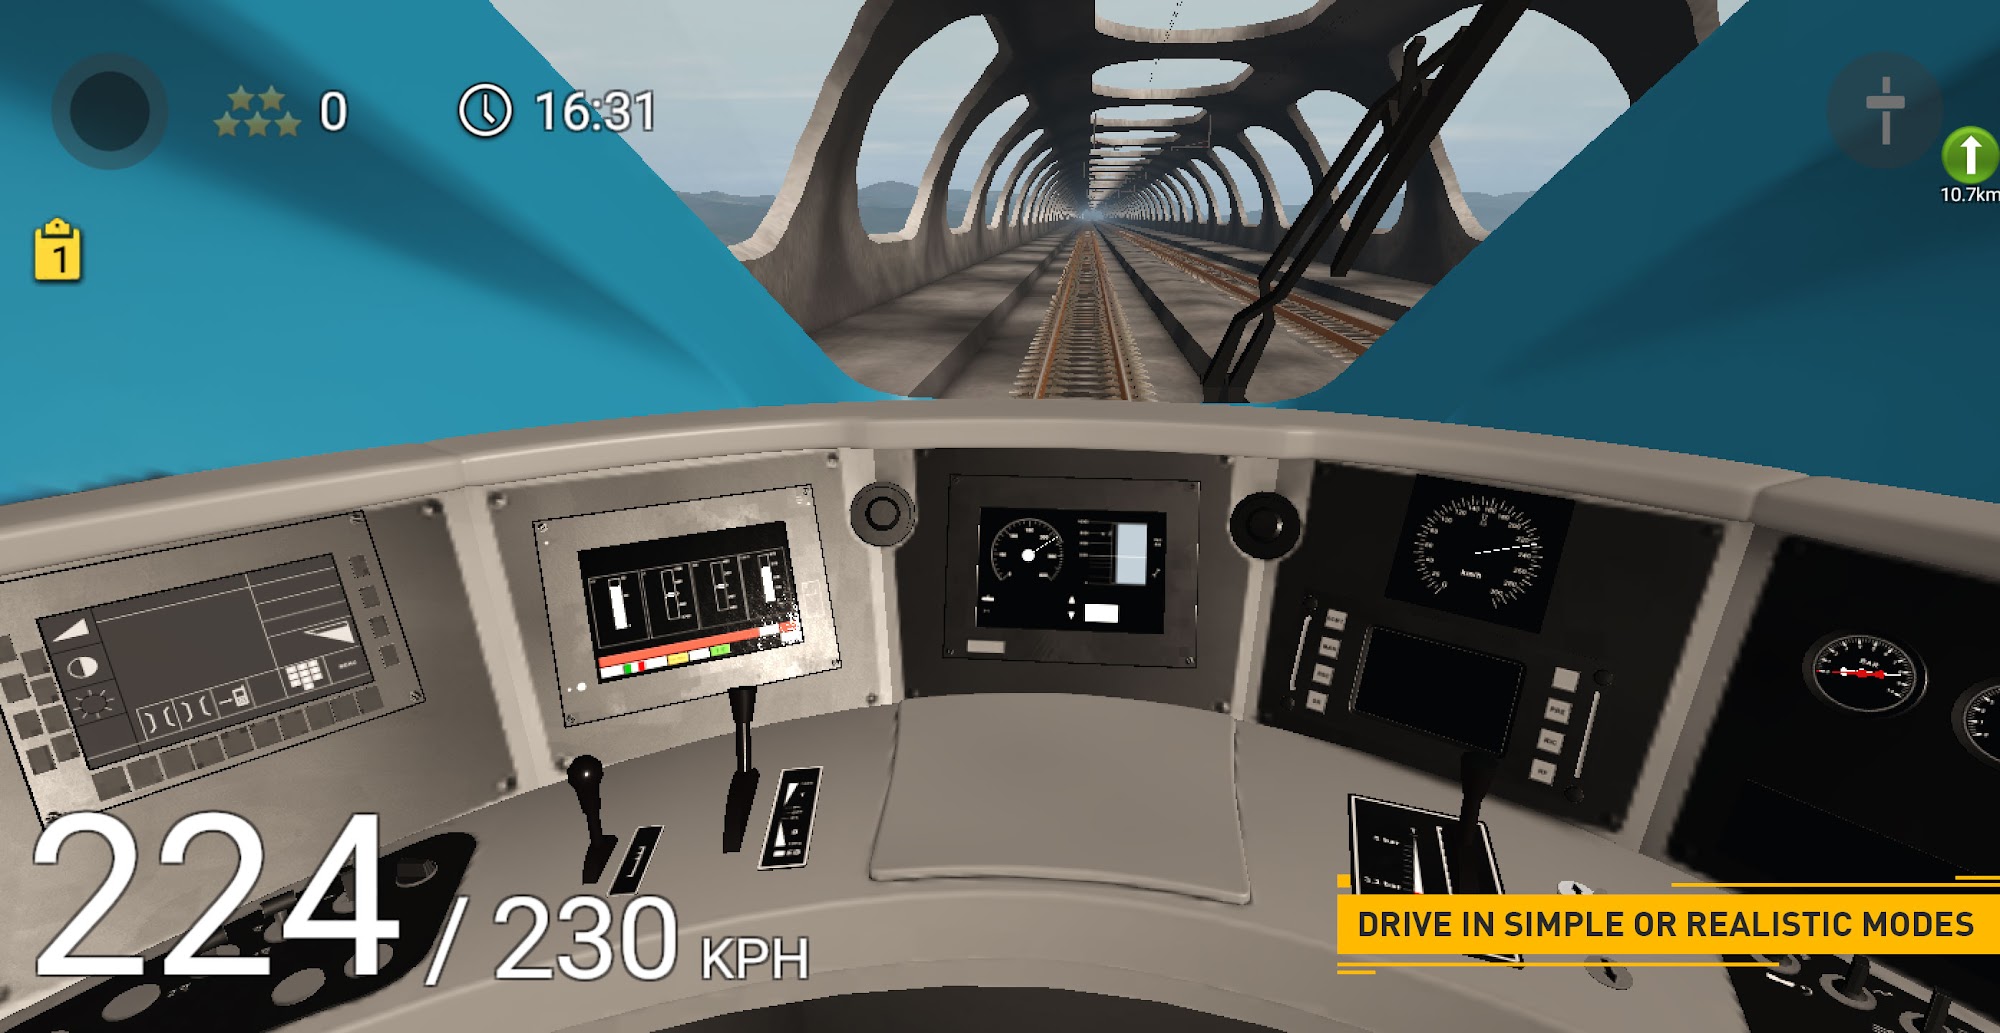 Trainz Simulator 3 скриншот 1